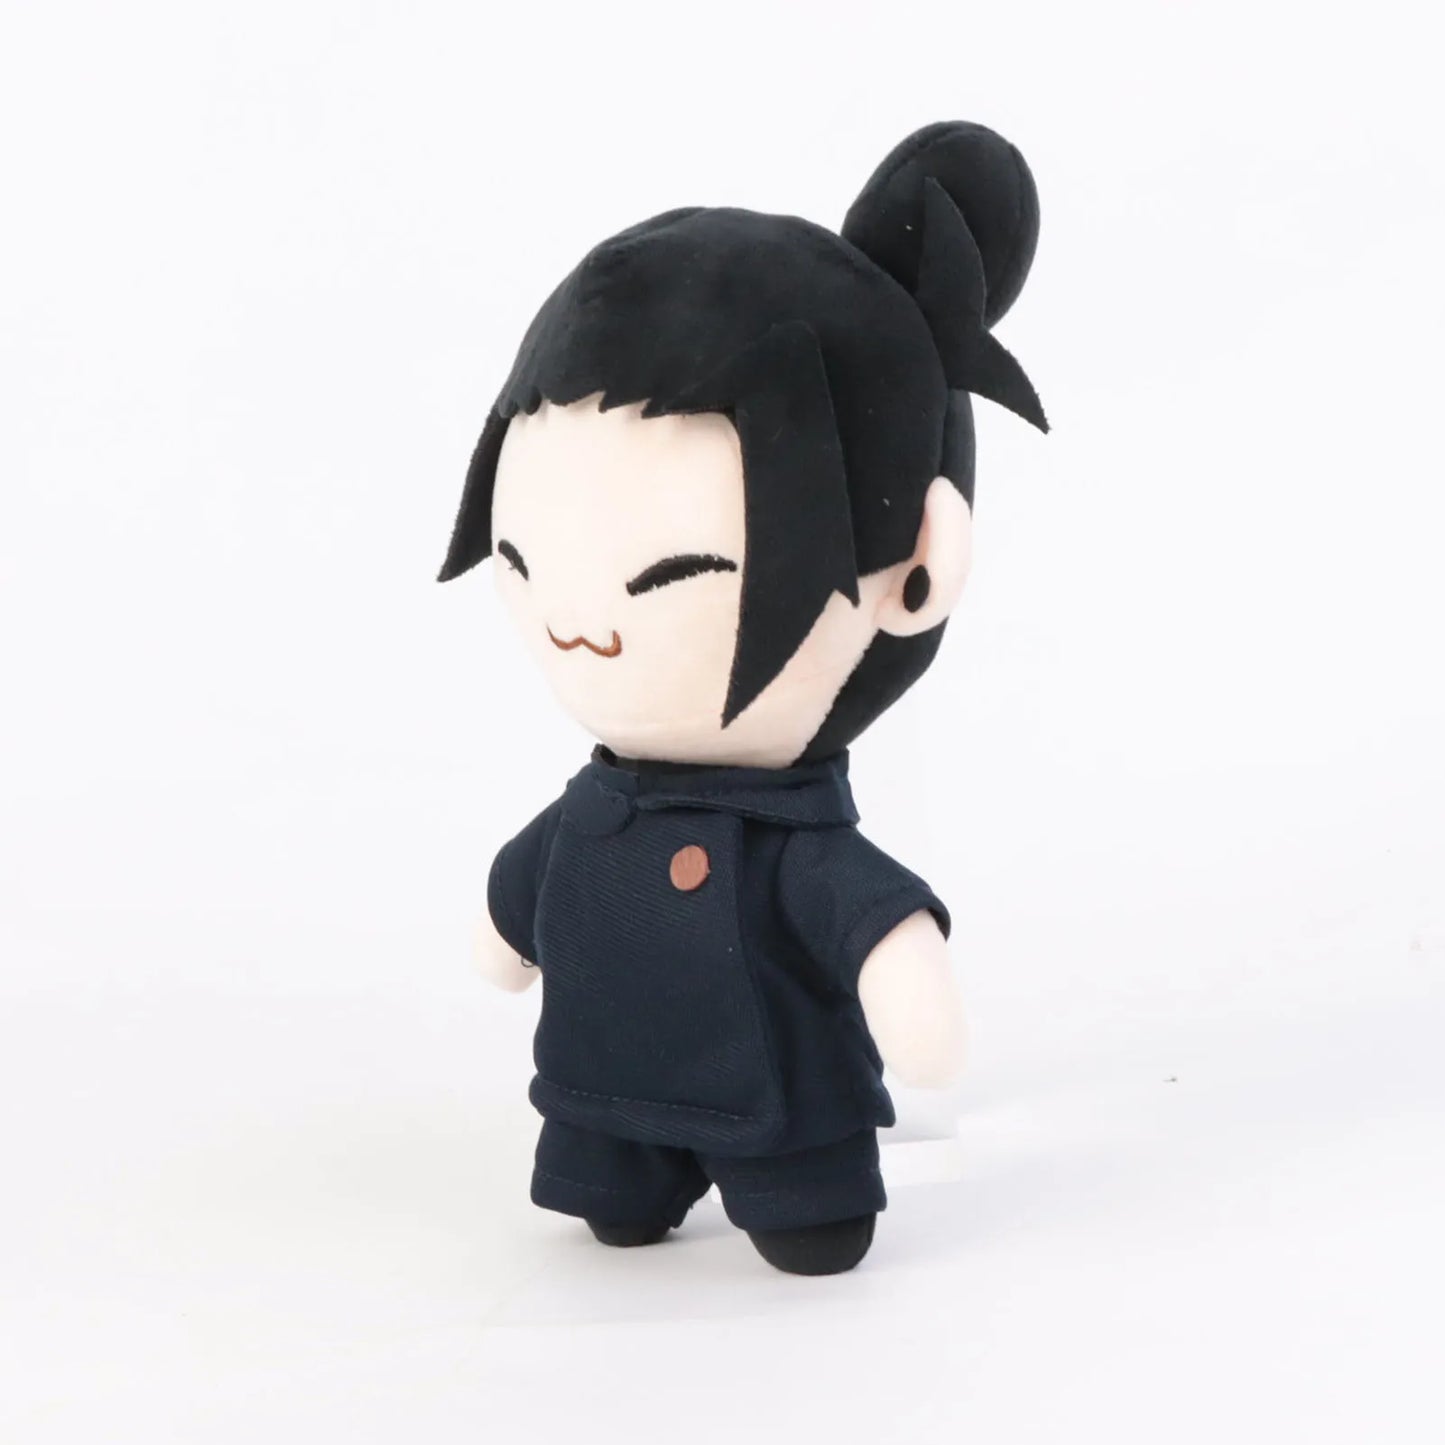 Kawaii Jujutsu Kaisen Satoru Gojo and Getou Suguru Plush Doll - 7.87 inch Cute Cartoon Game Character Toy